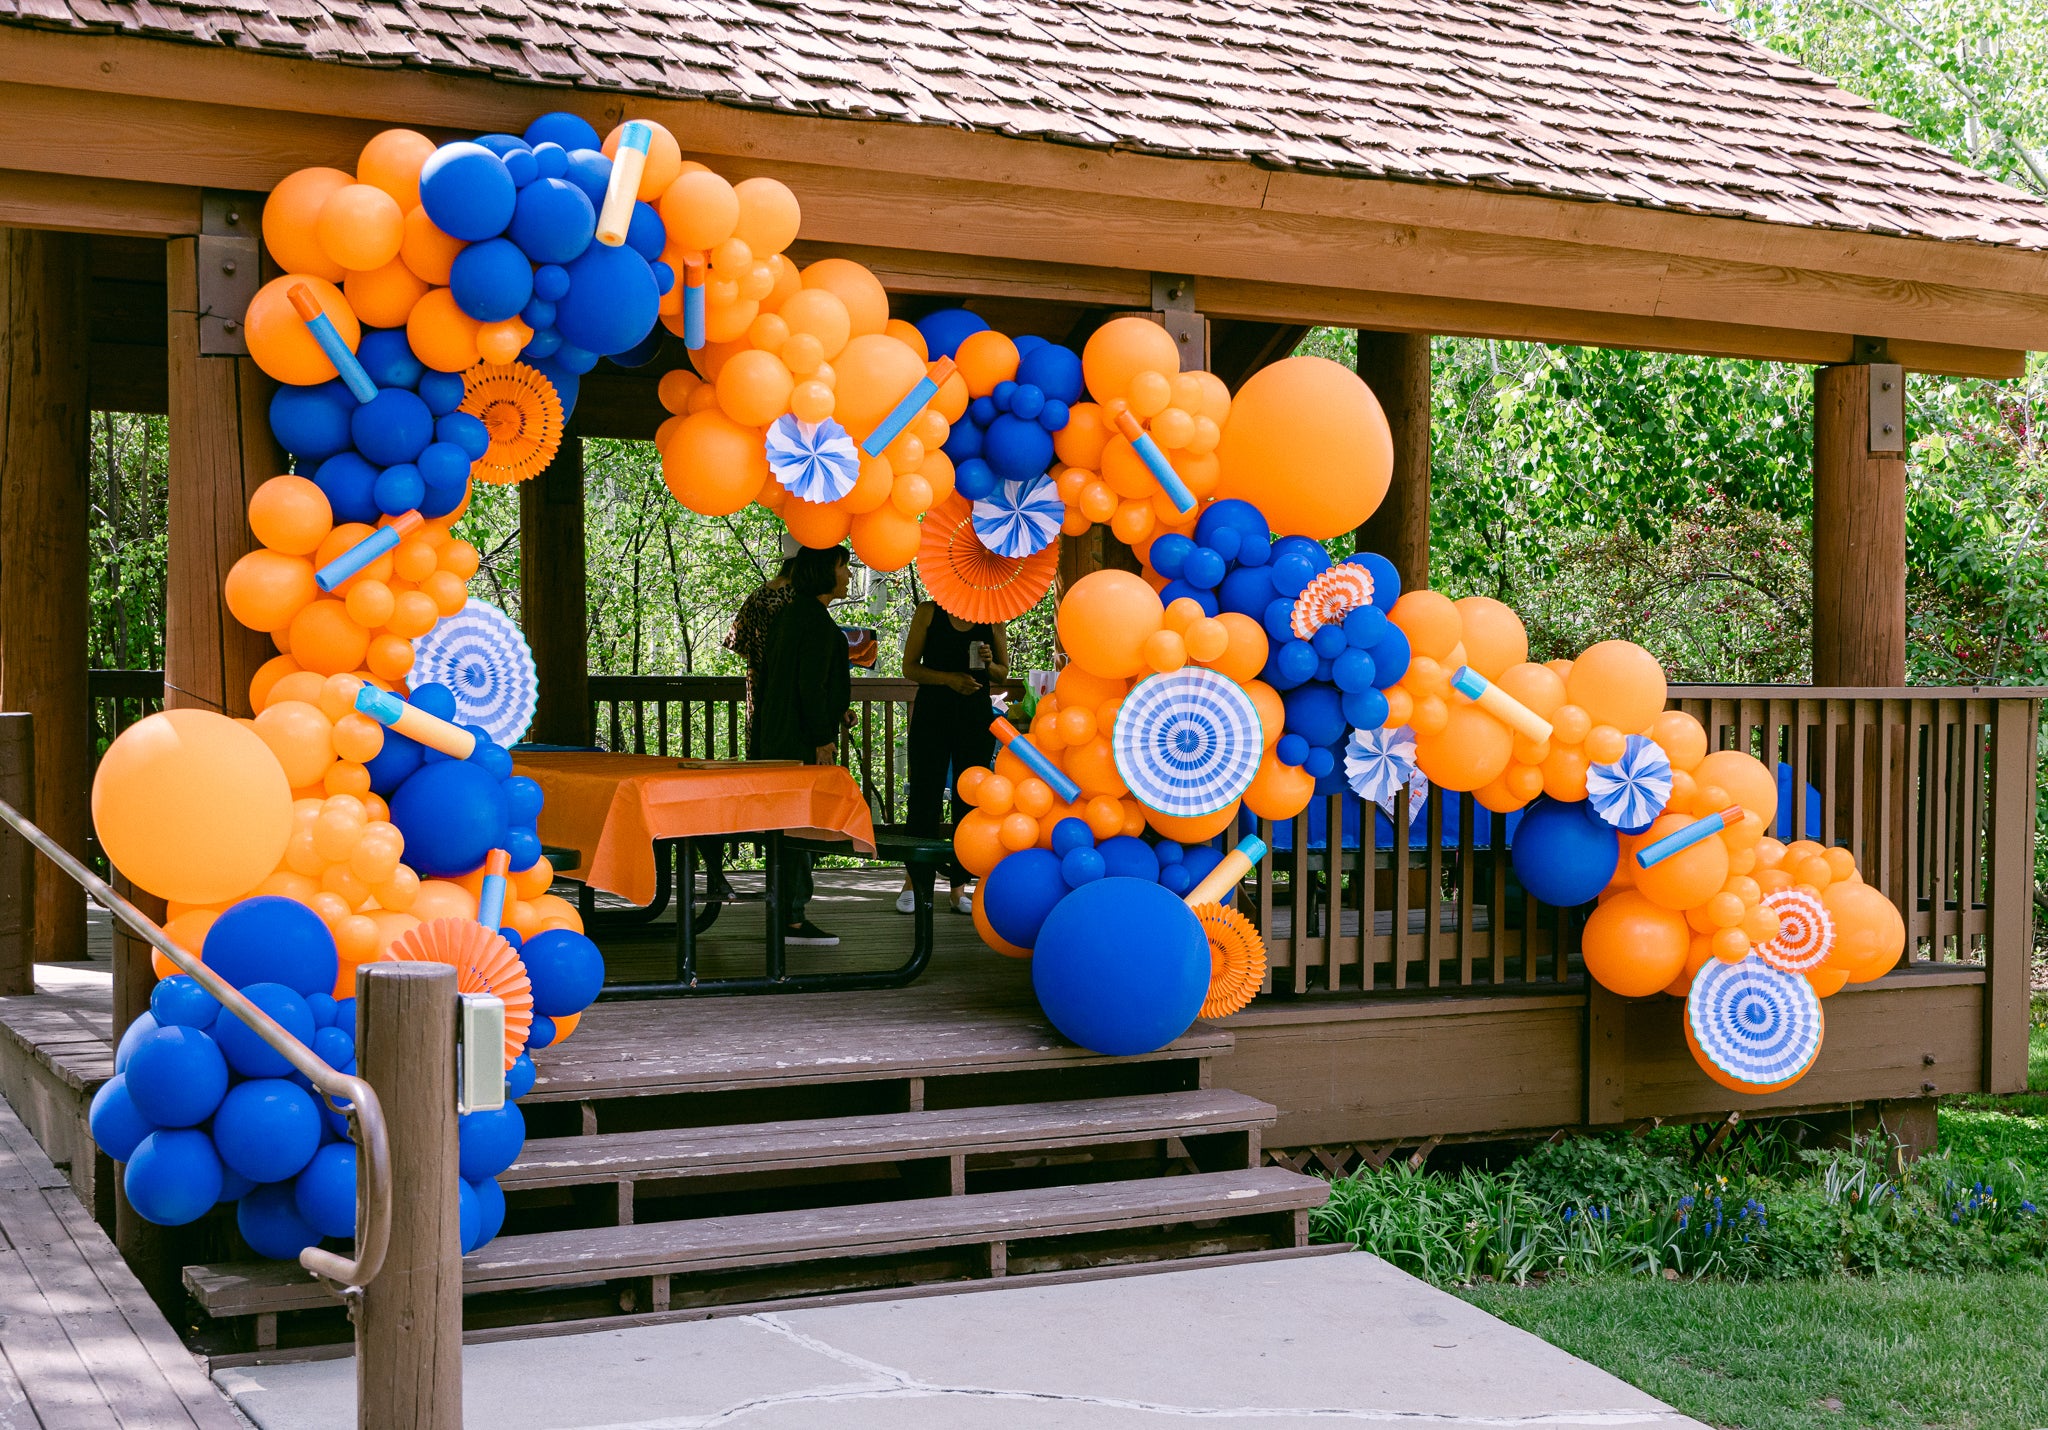 Nerf-themed birthday party balloon garland decoration.